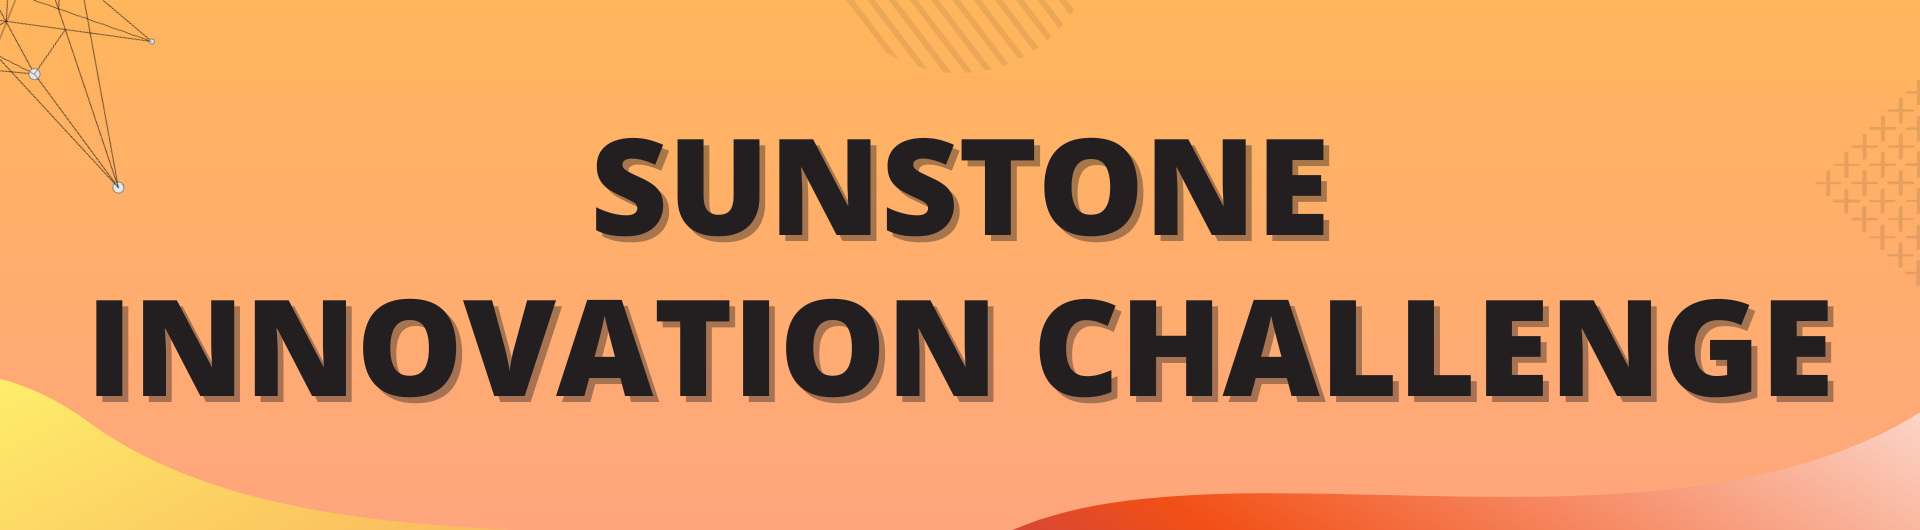 Sunstone Innovation Challenge